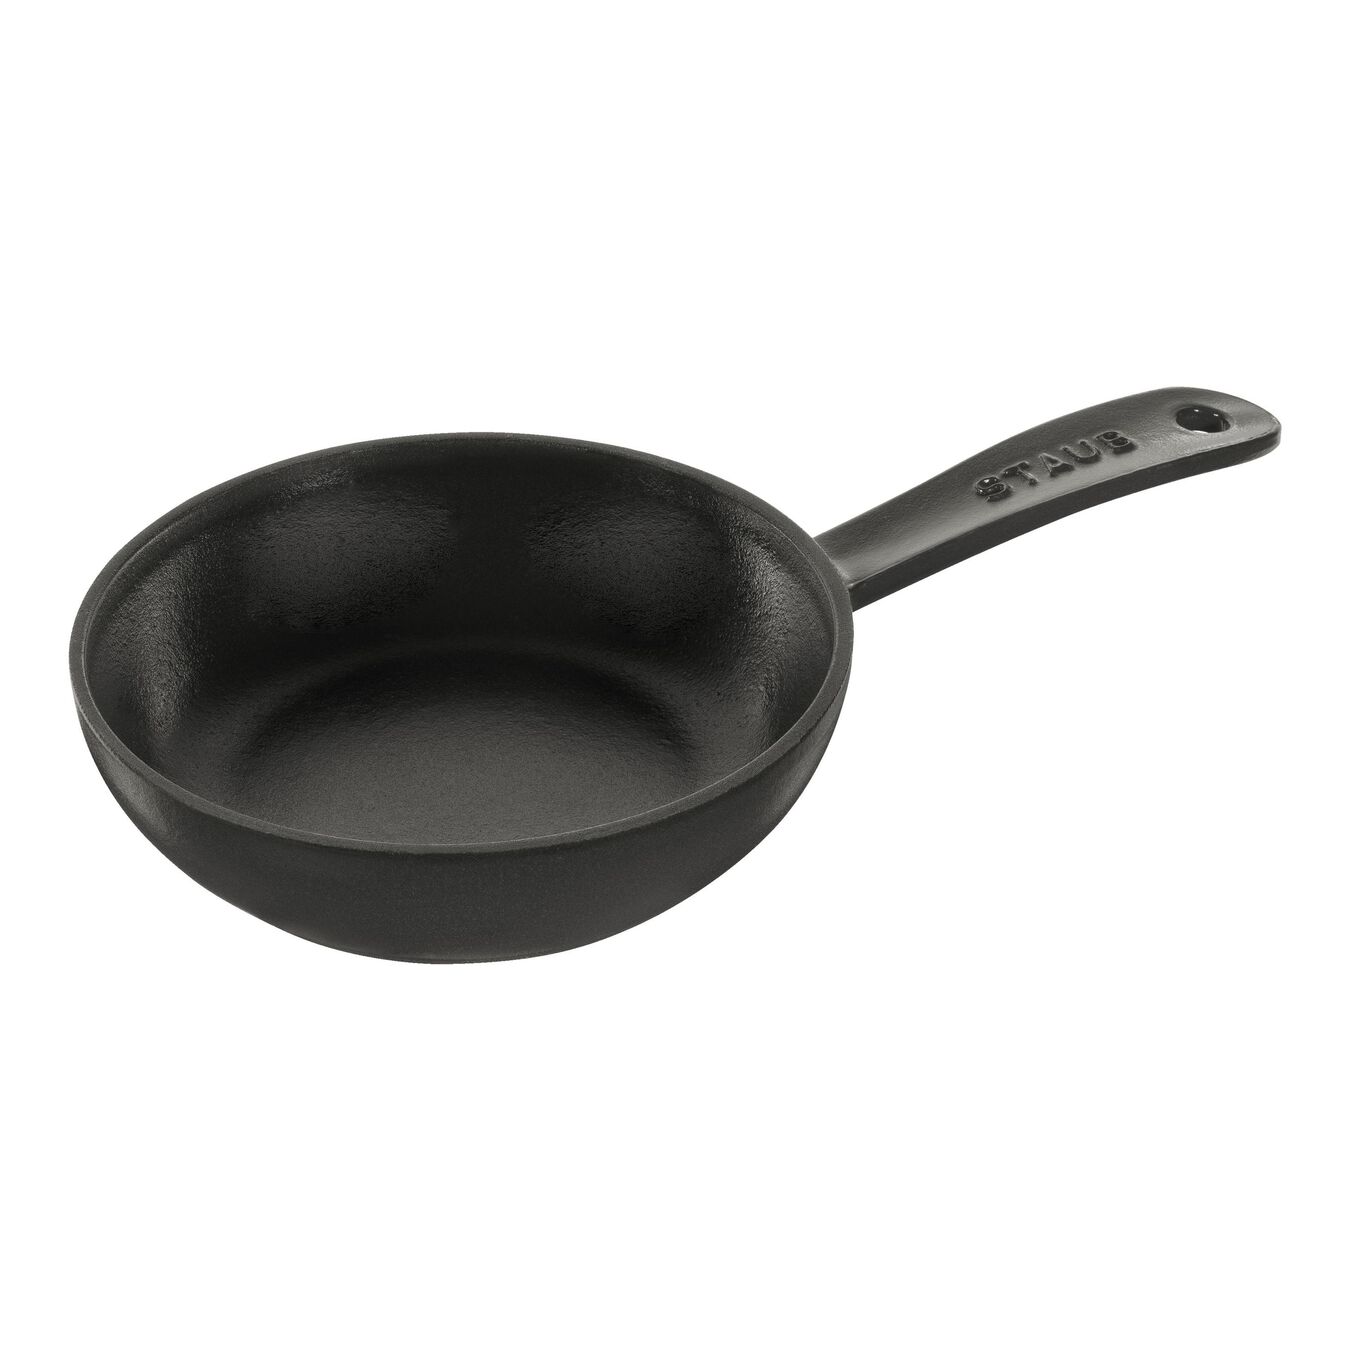 16 cm / 6.5 inch cast iron Frying pan, black,,large 1